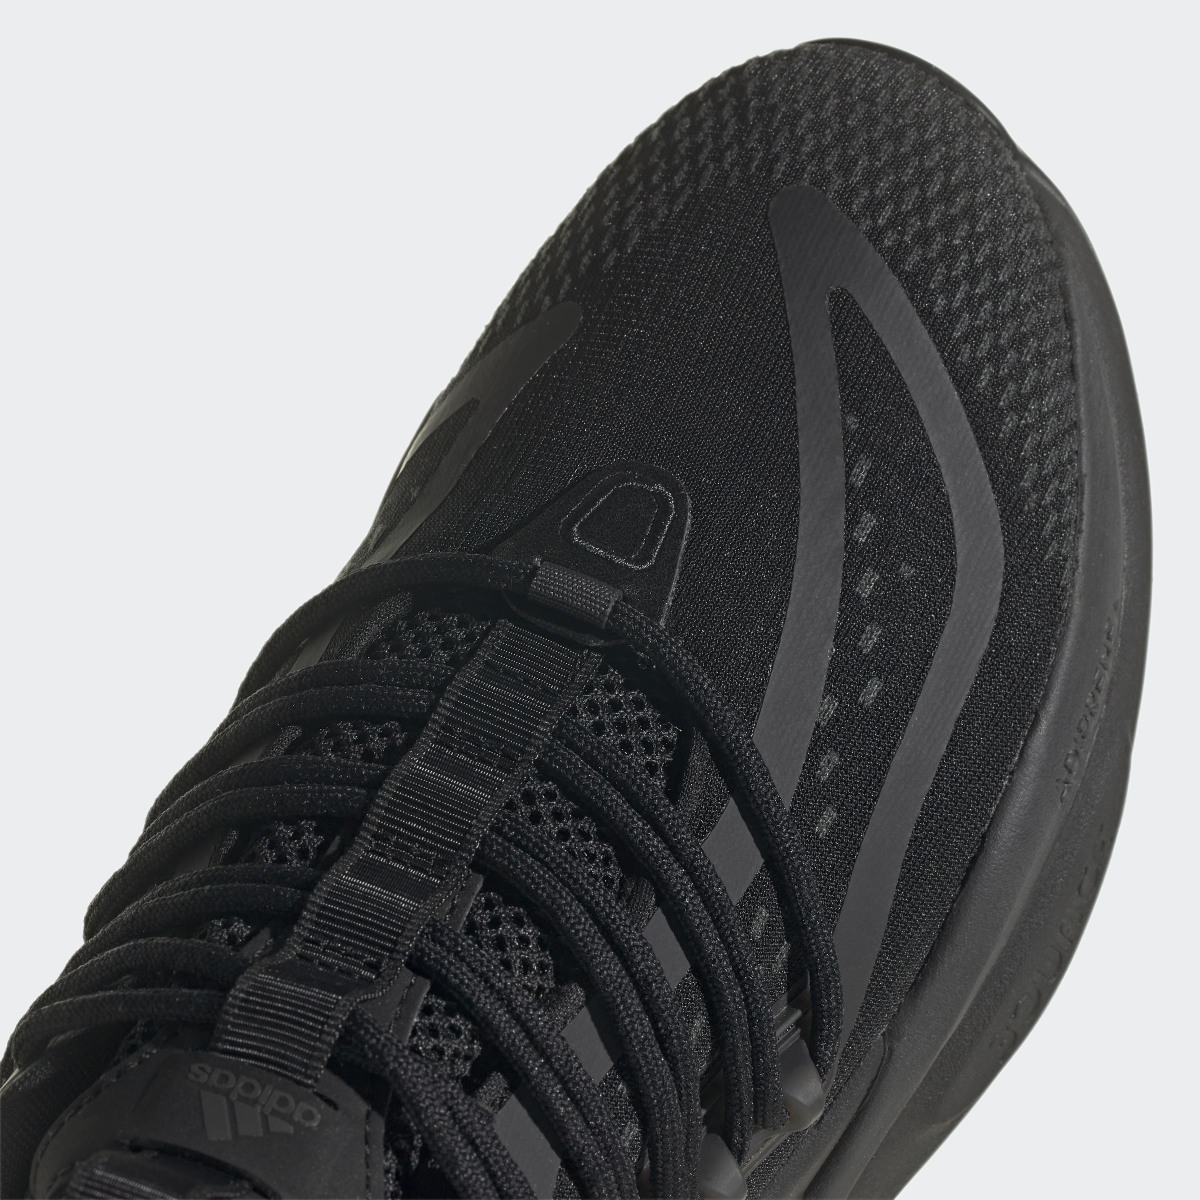 Adidas Alphaboost V1 Ayakkabı. 9